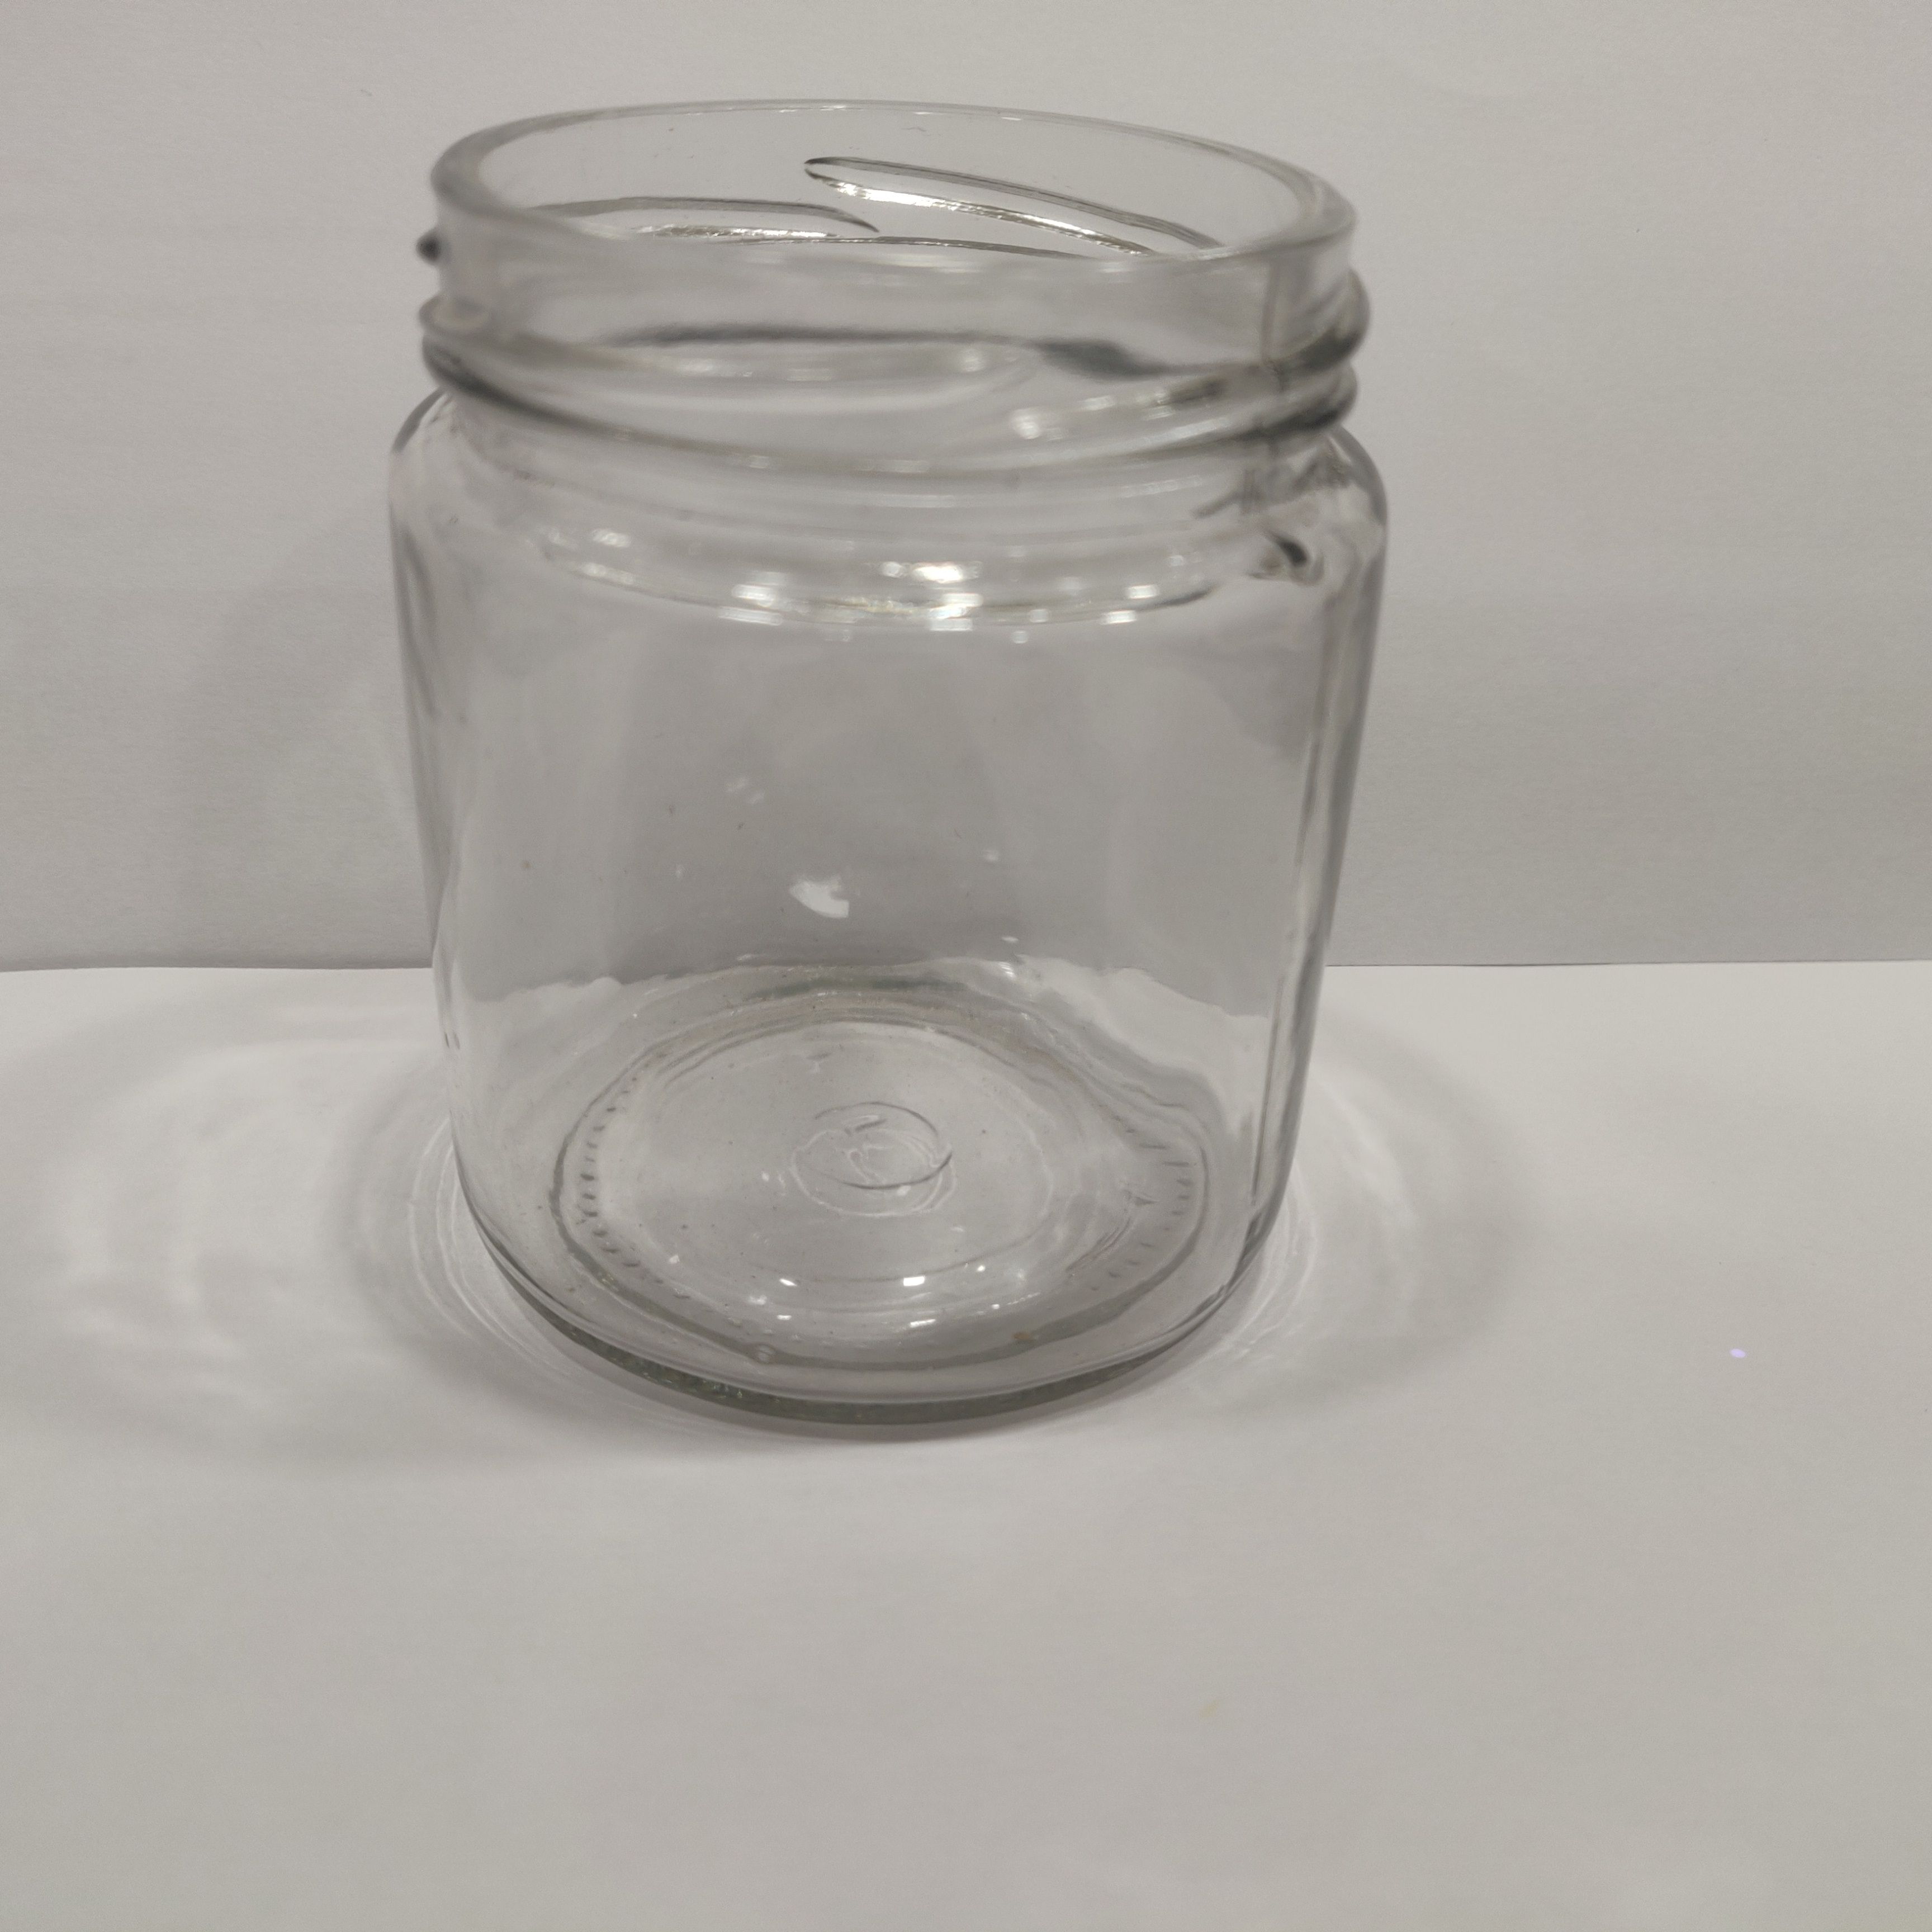 Gherkins glass jars